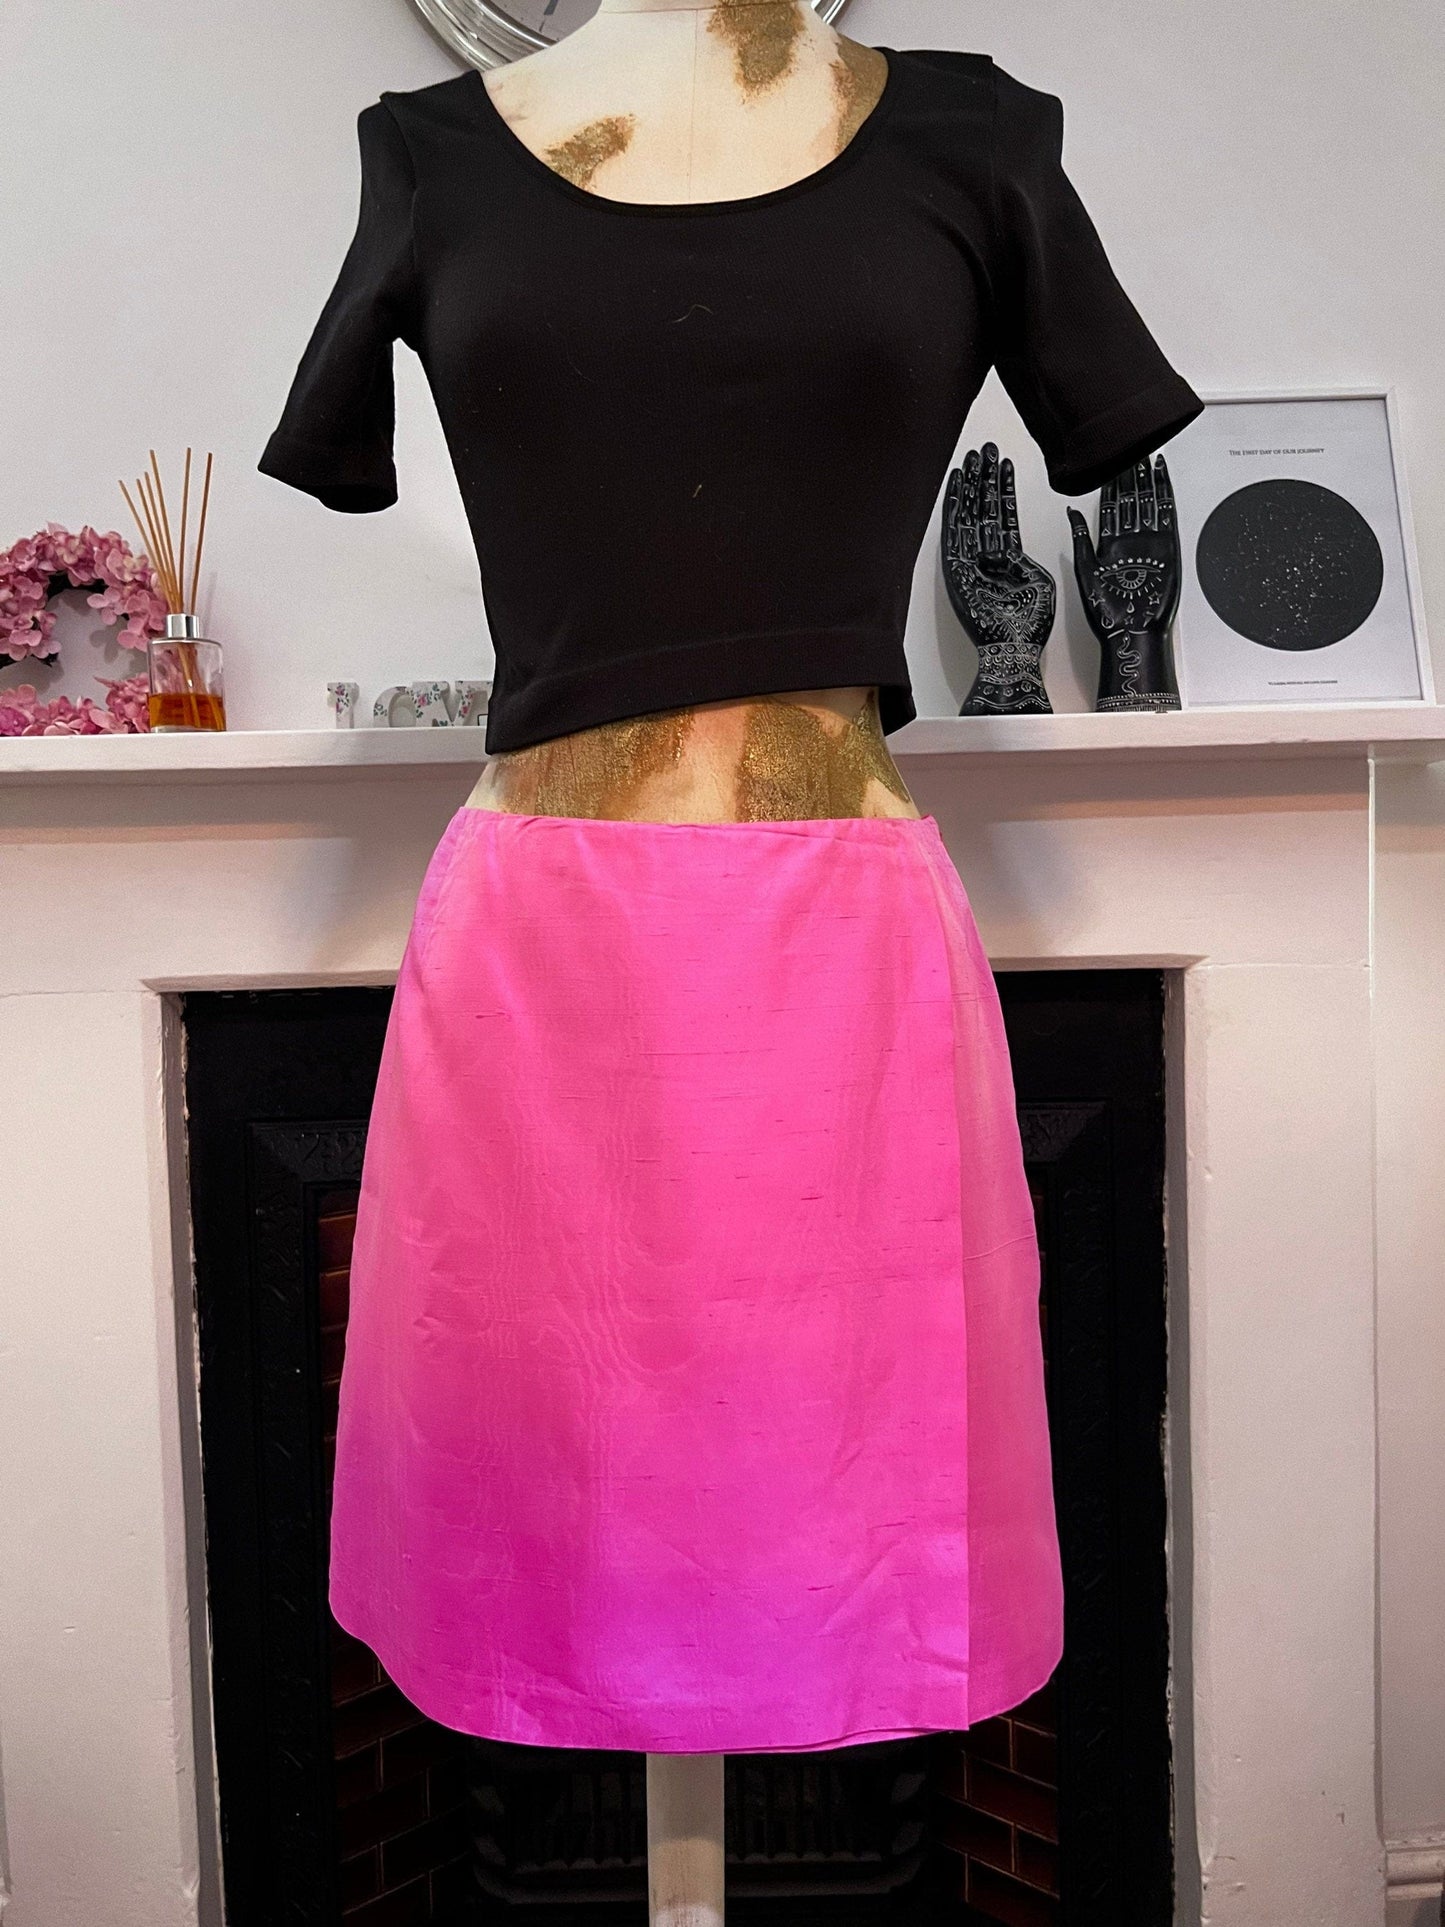 Vintage Christian Lacroix Bazar Silk Skirt - Bright Pink with Orange Sheen size 12 Eu(40) Y2K